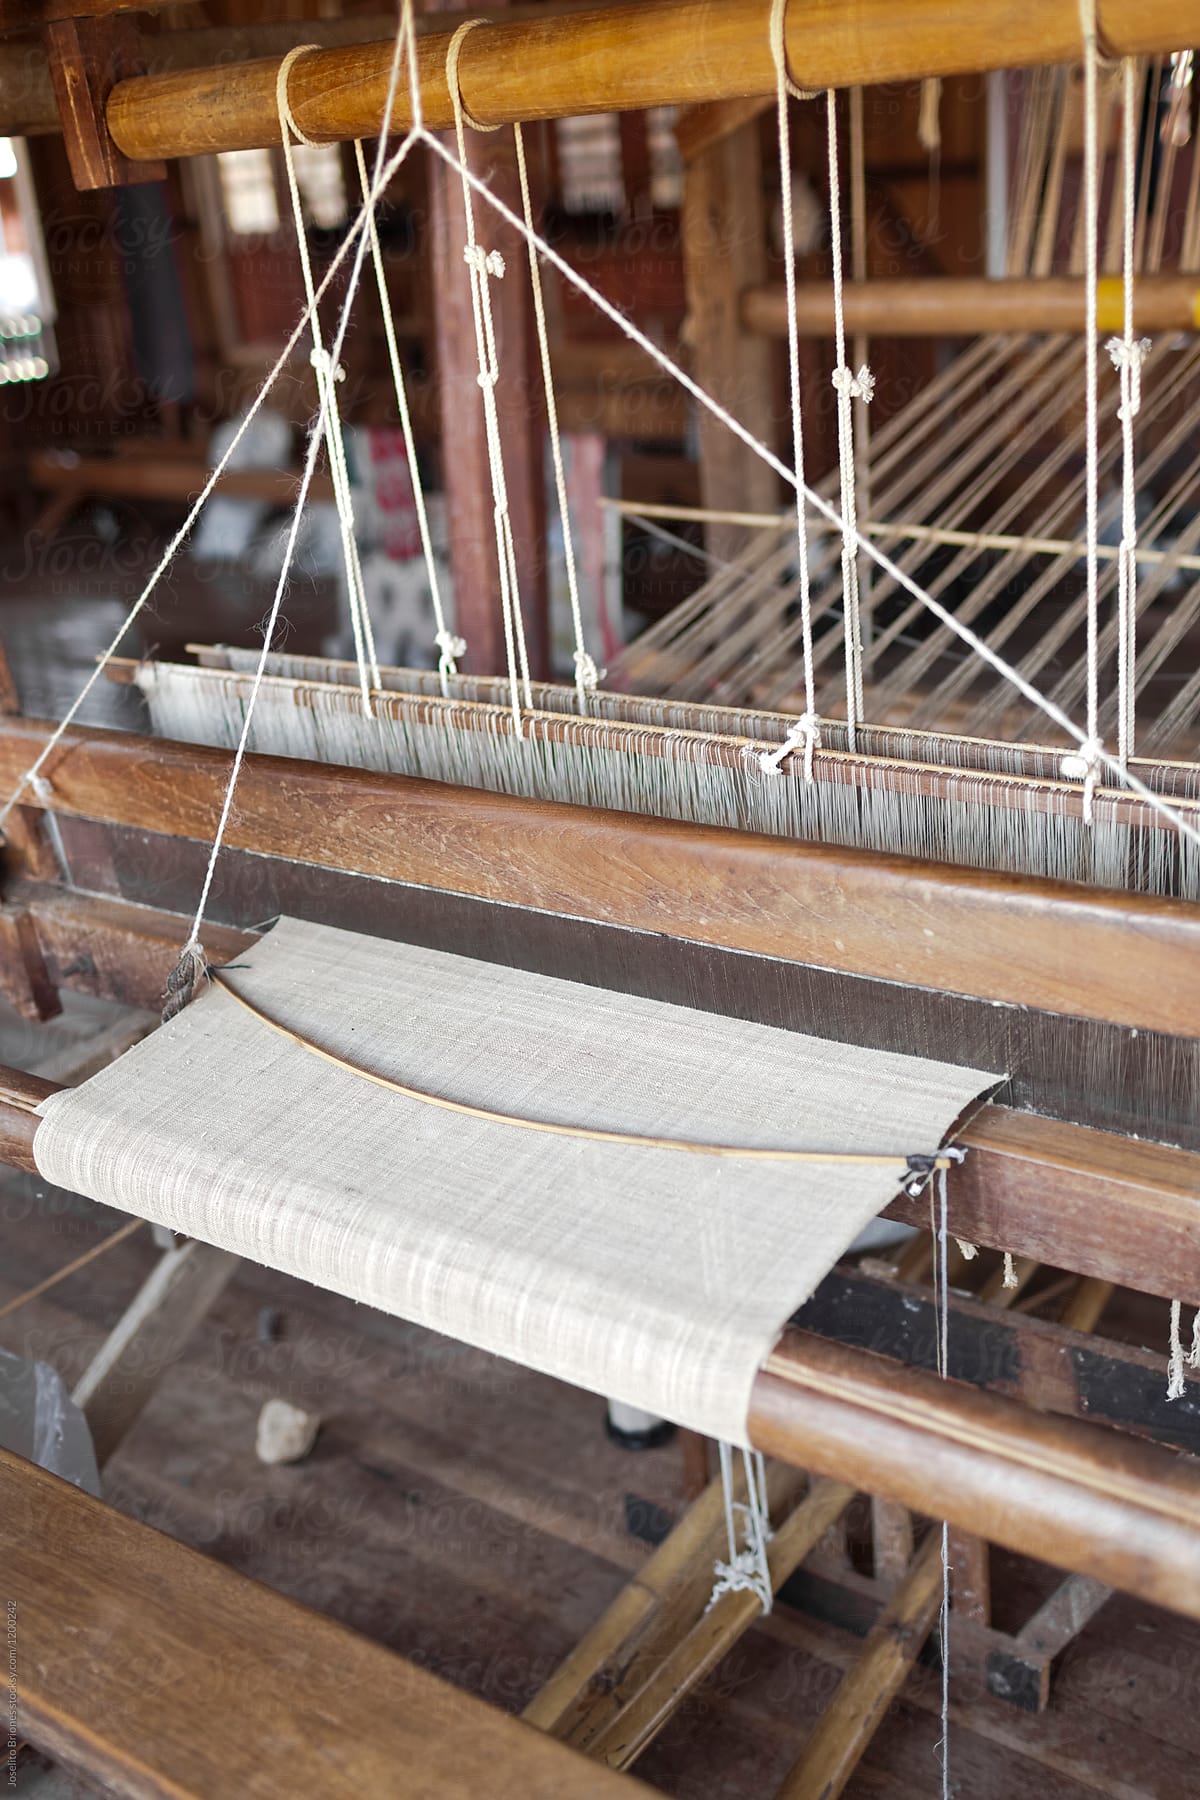 Typical Set-up of Sillk Fabric Weaving Loom in Myanmar